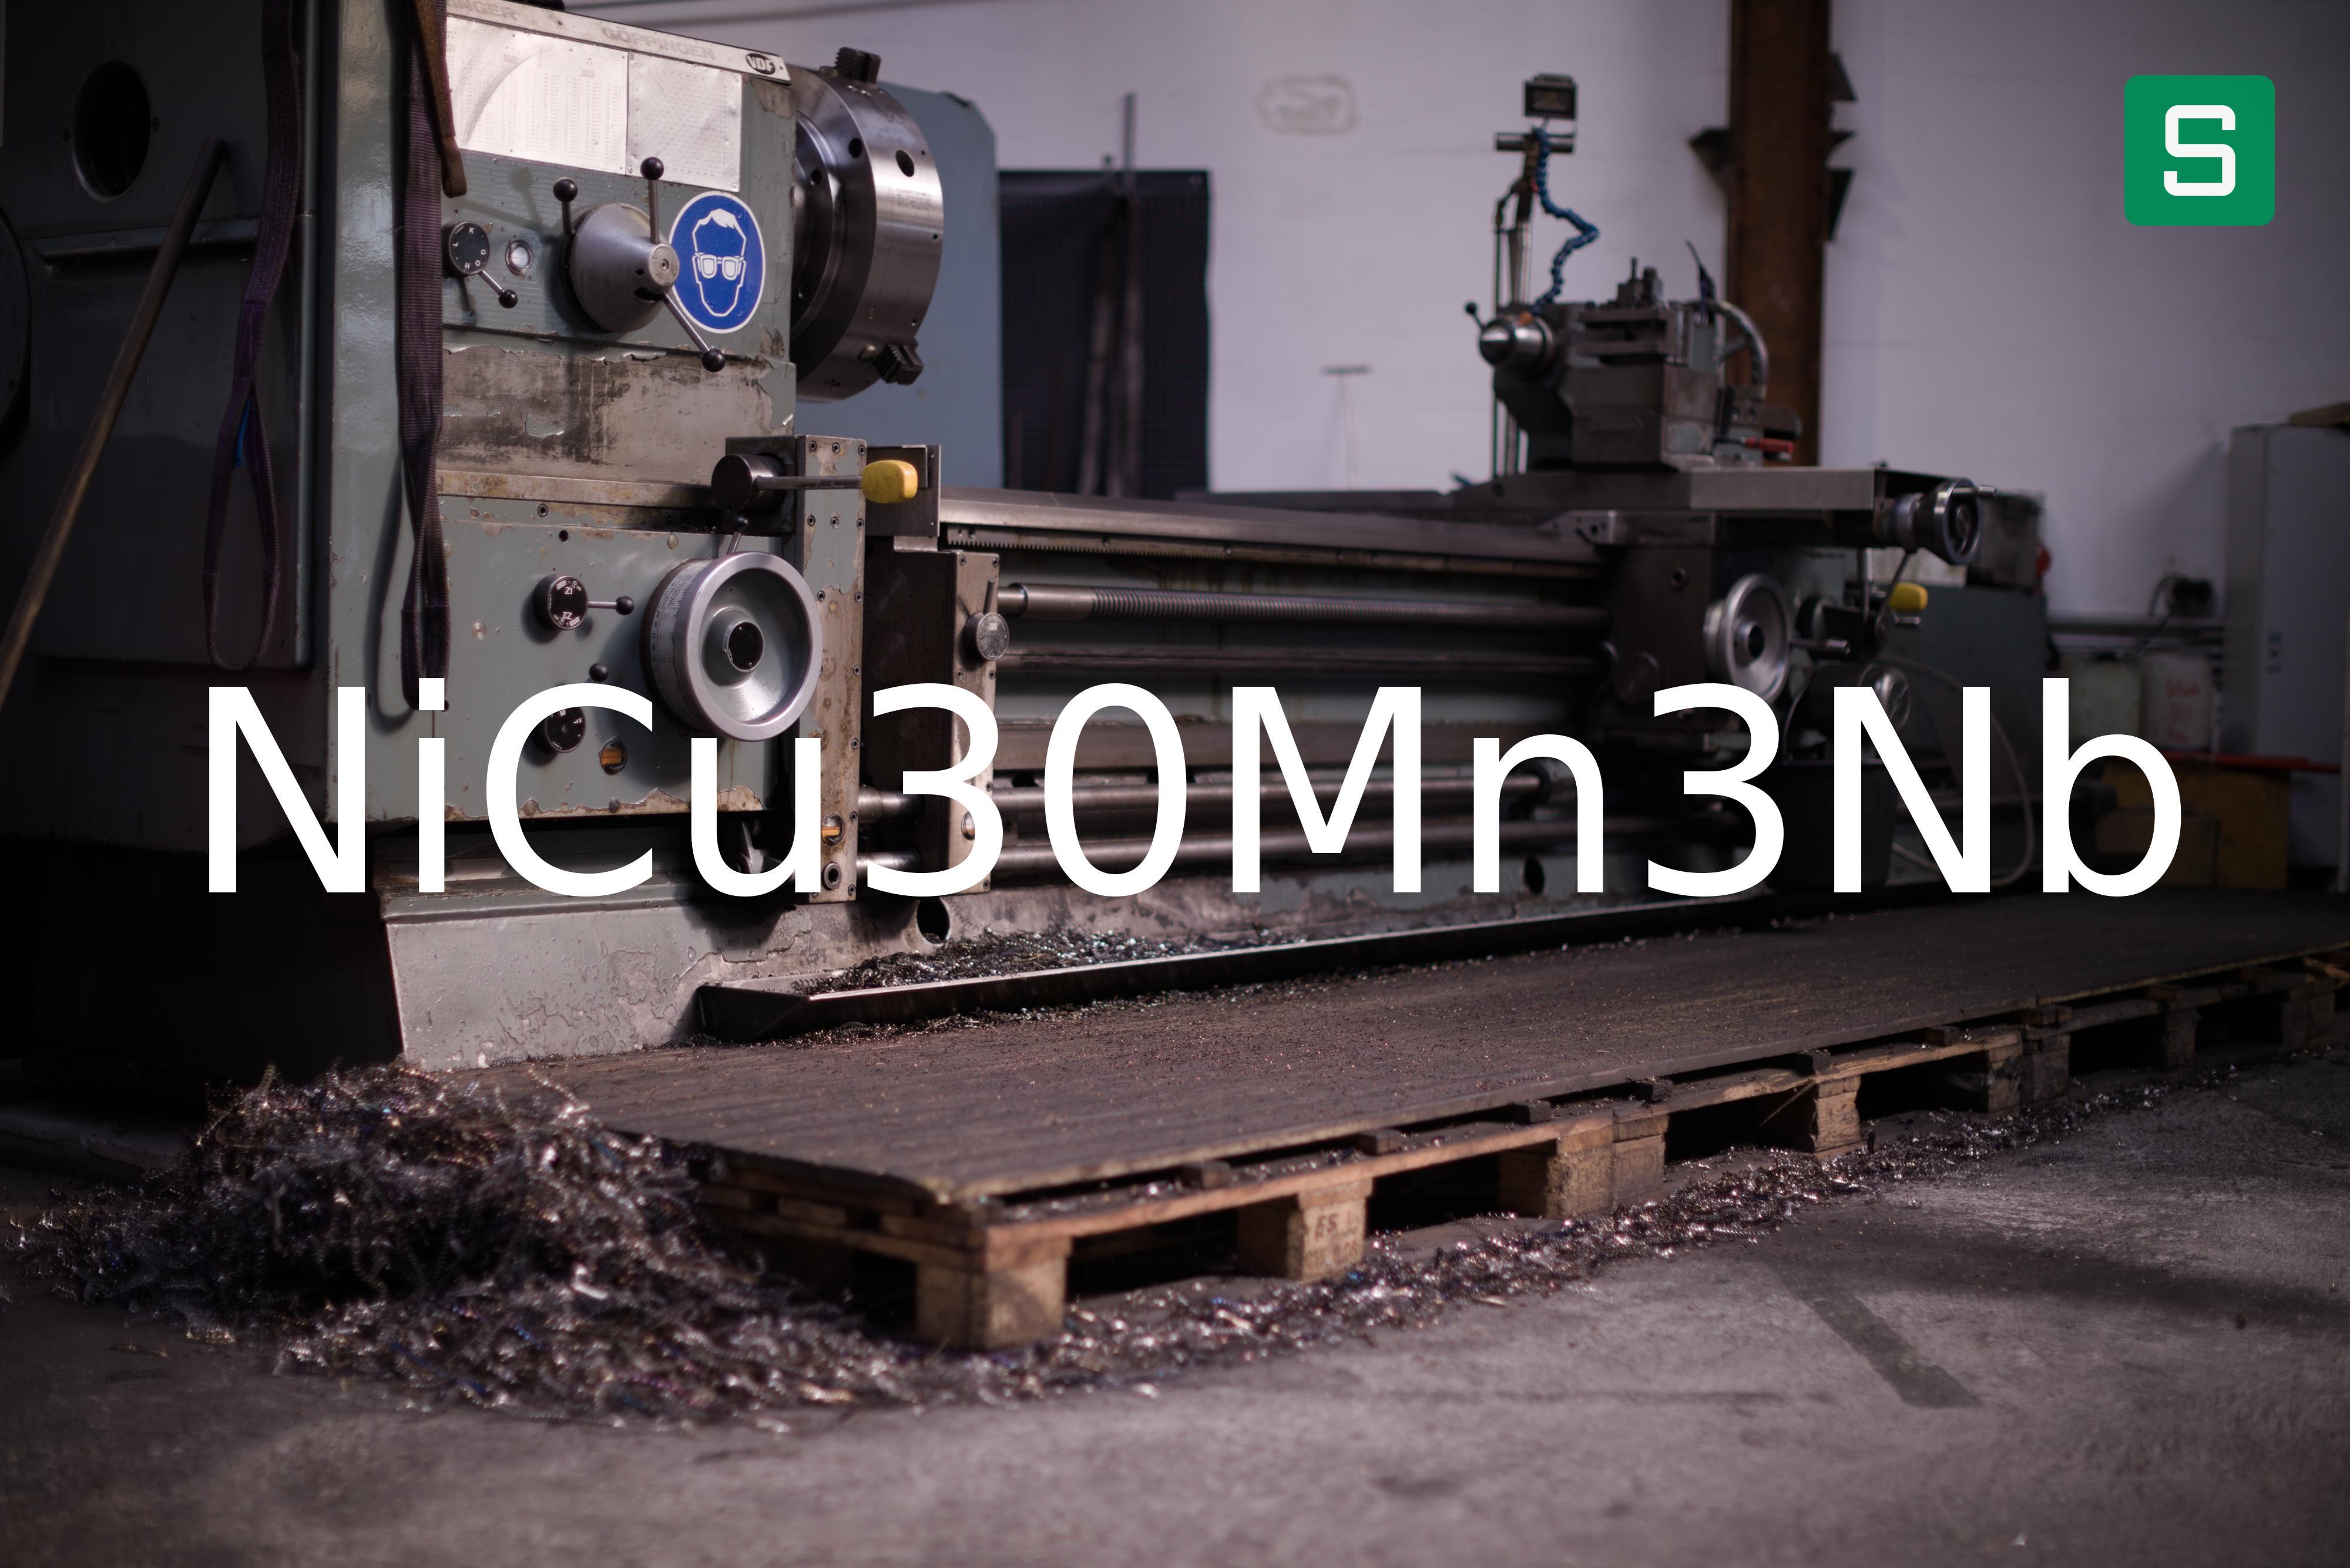 Steel Material: NiCu30Mn3Nb